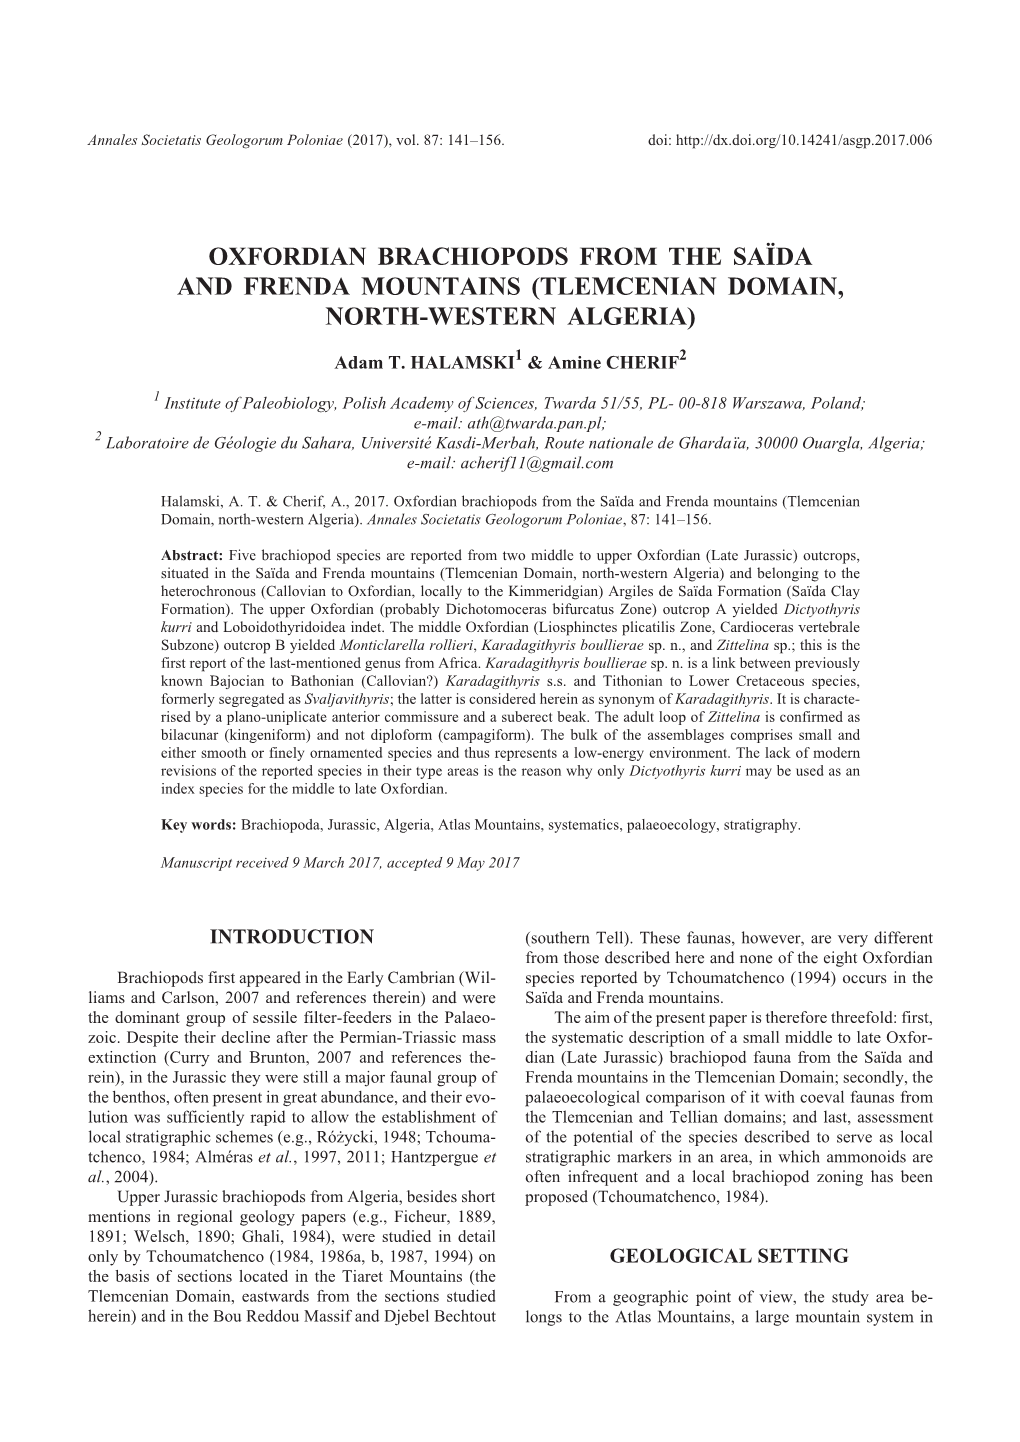 Oxfordian Brachiopods from the Sa Da and Frenda